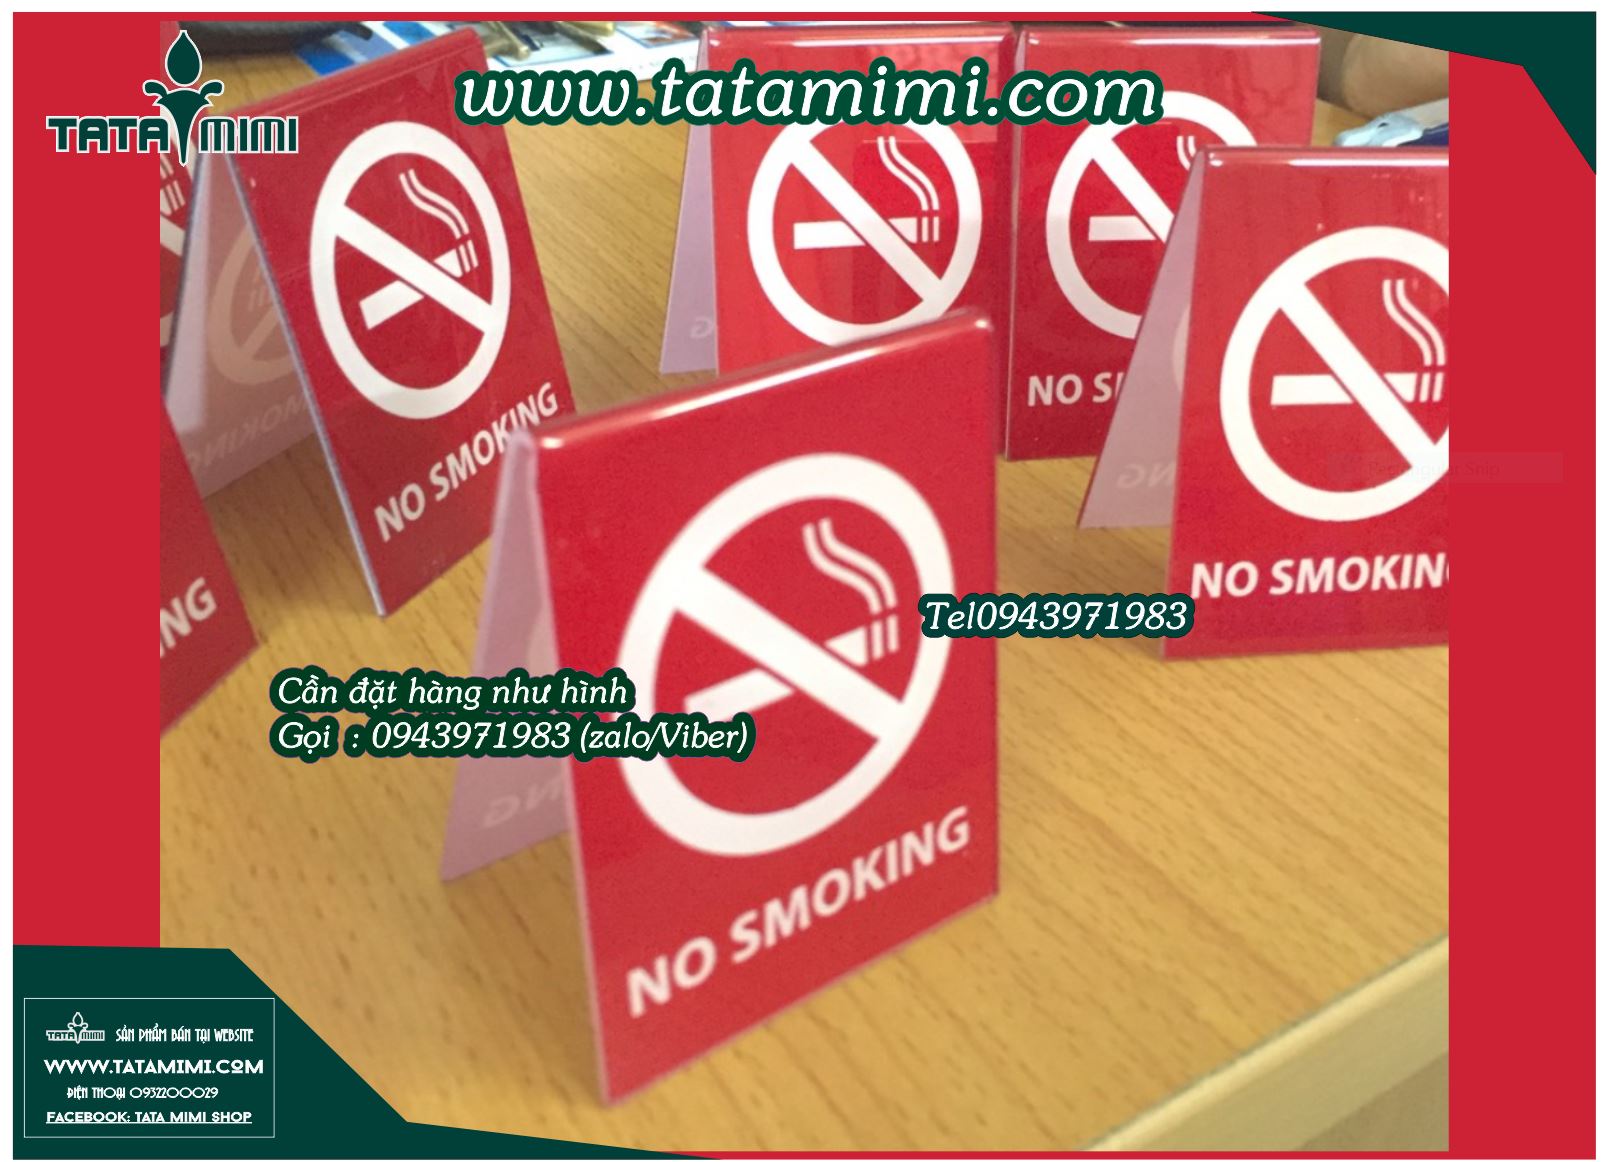 Biển bảng cấm hút thuốc in decal